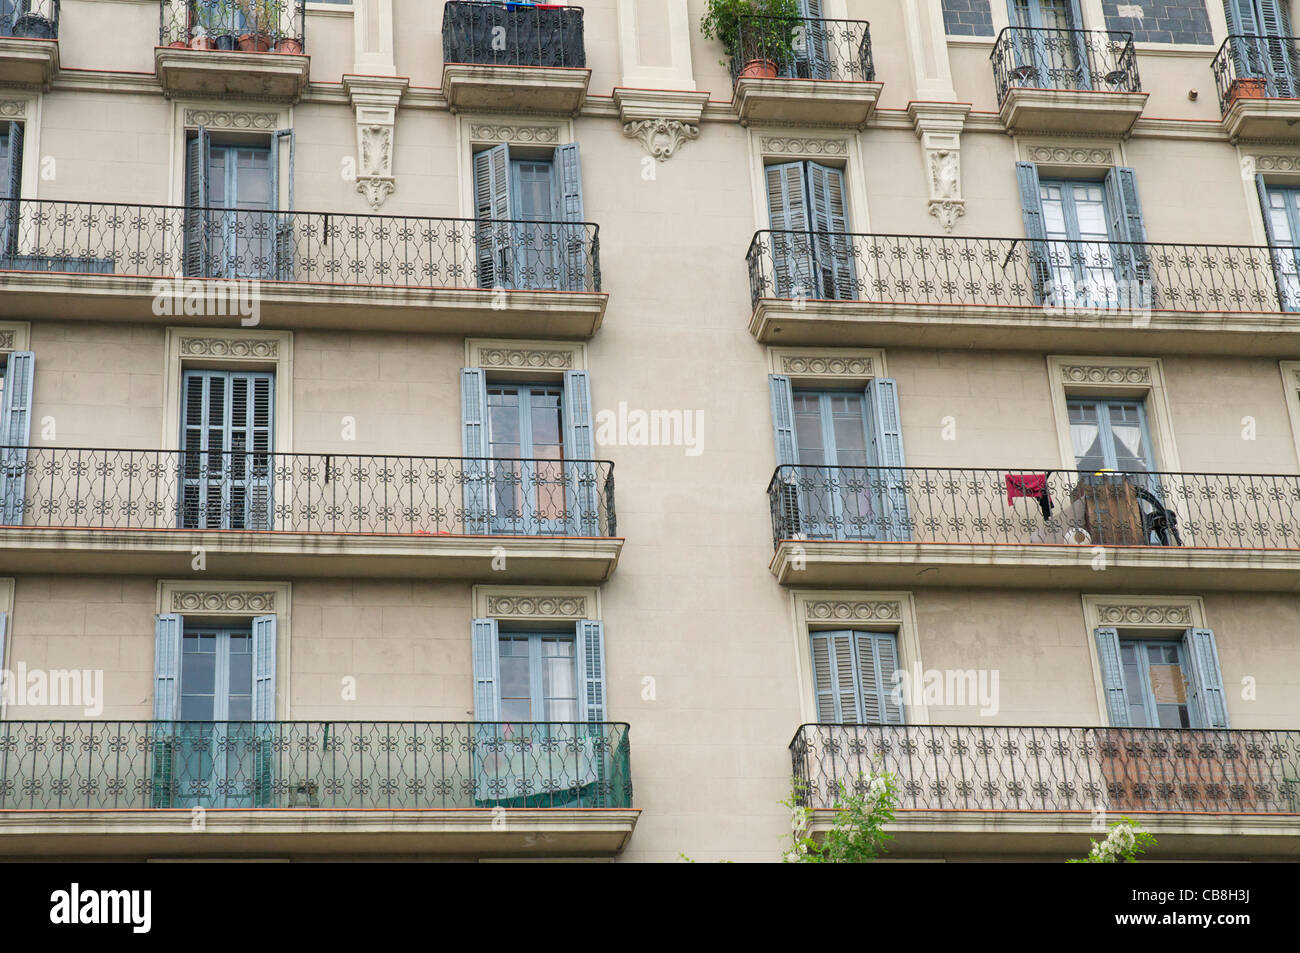 Barcelona city apartment blocks Stock Photo